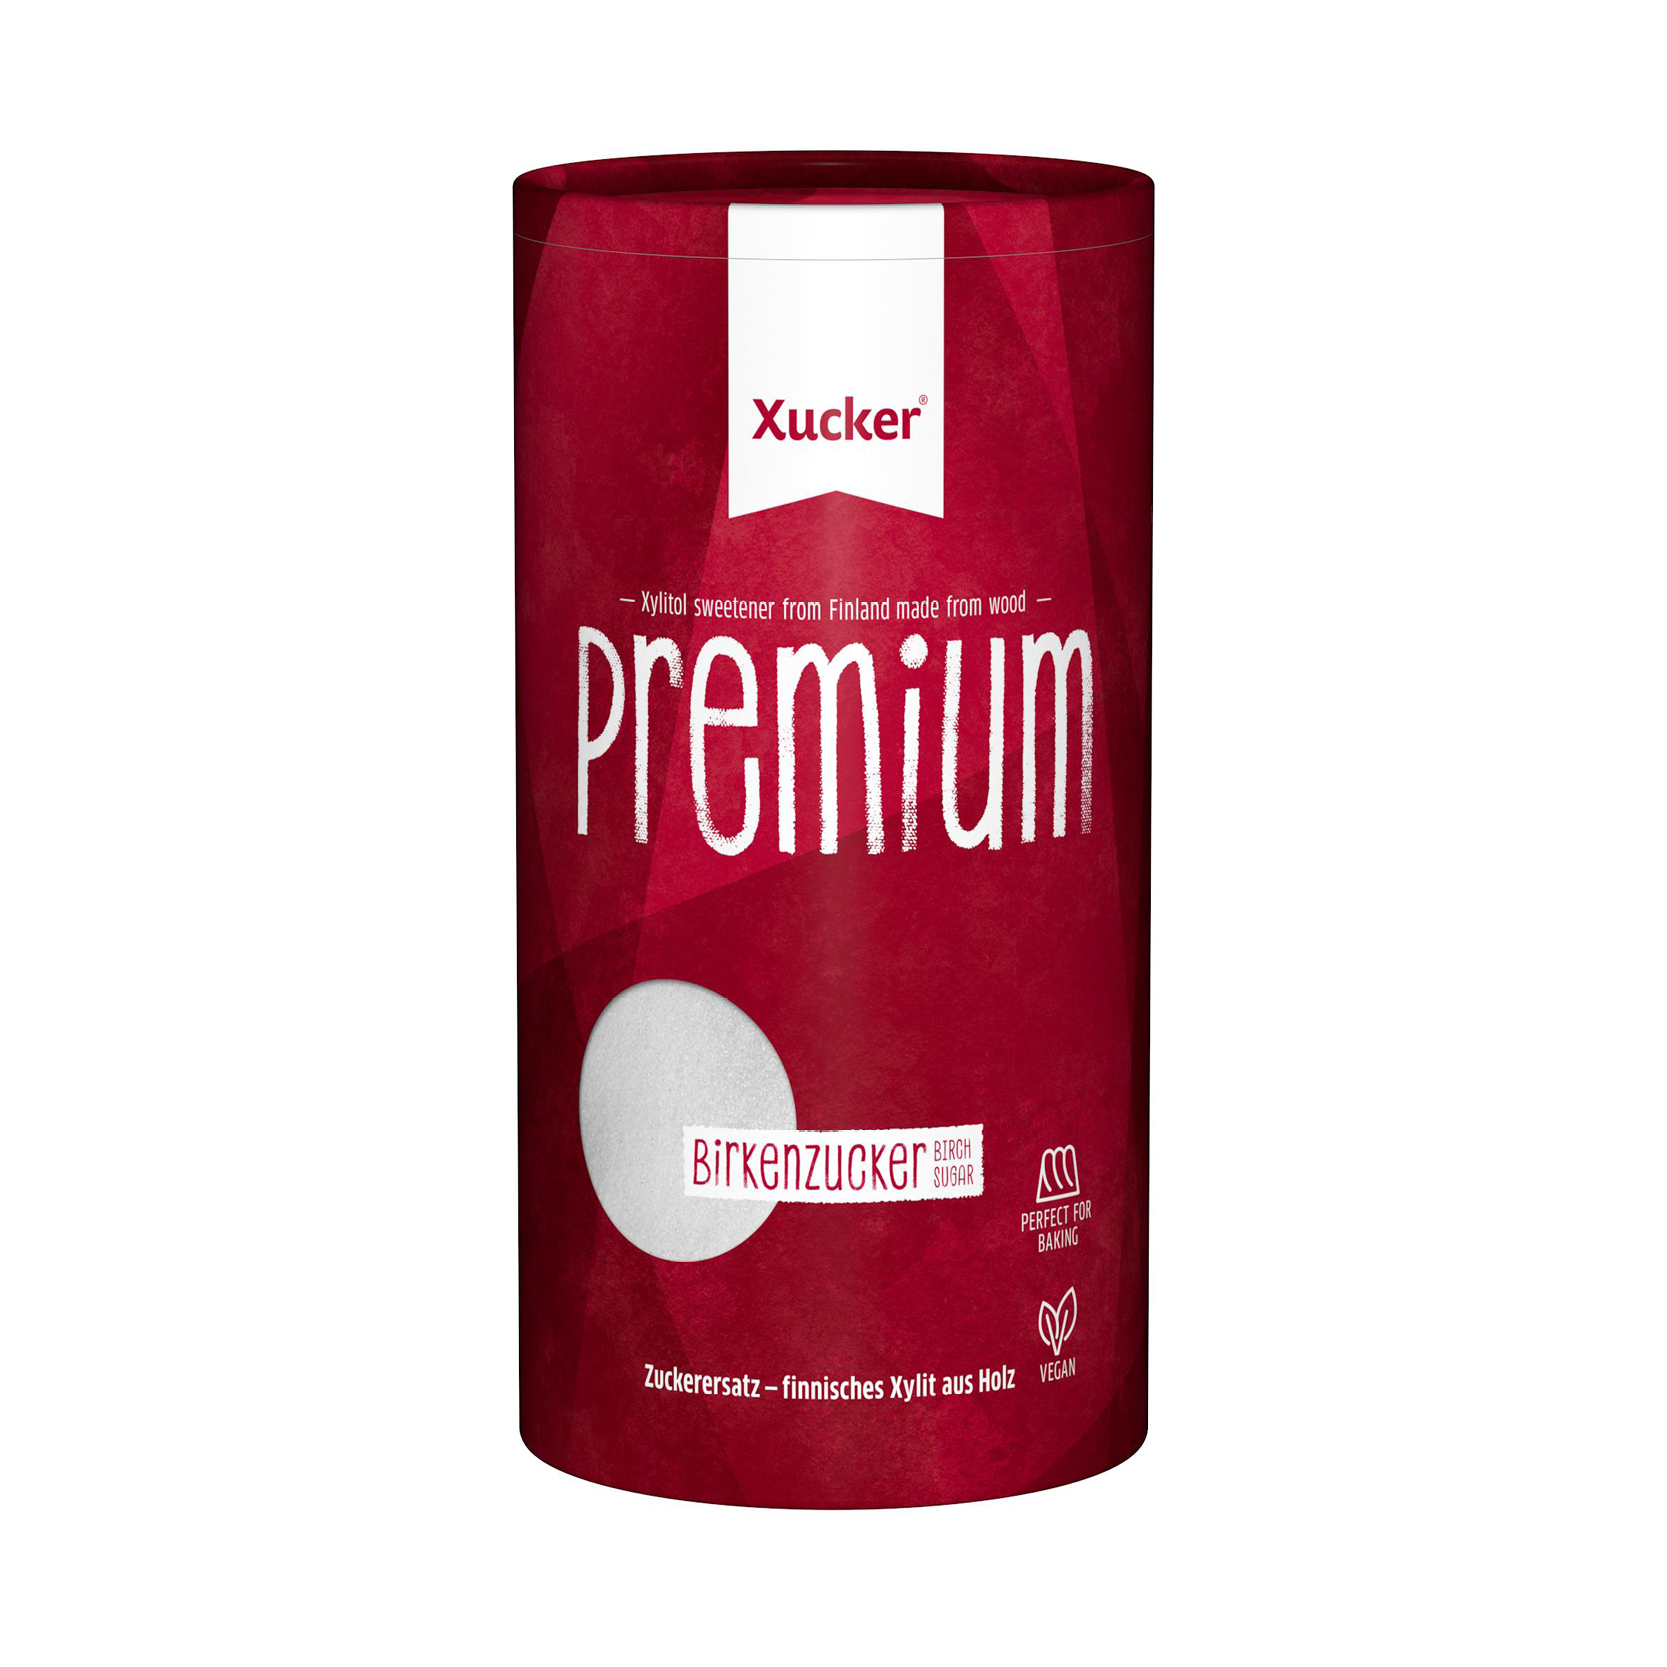 Xucker Premium Dose 1kg